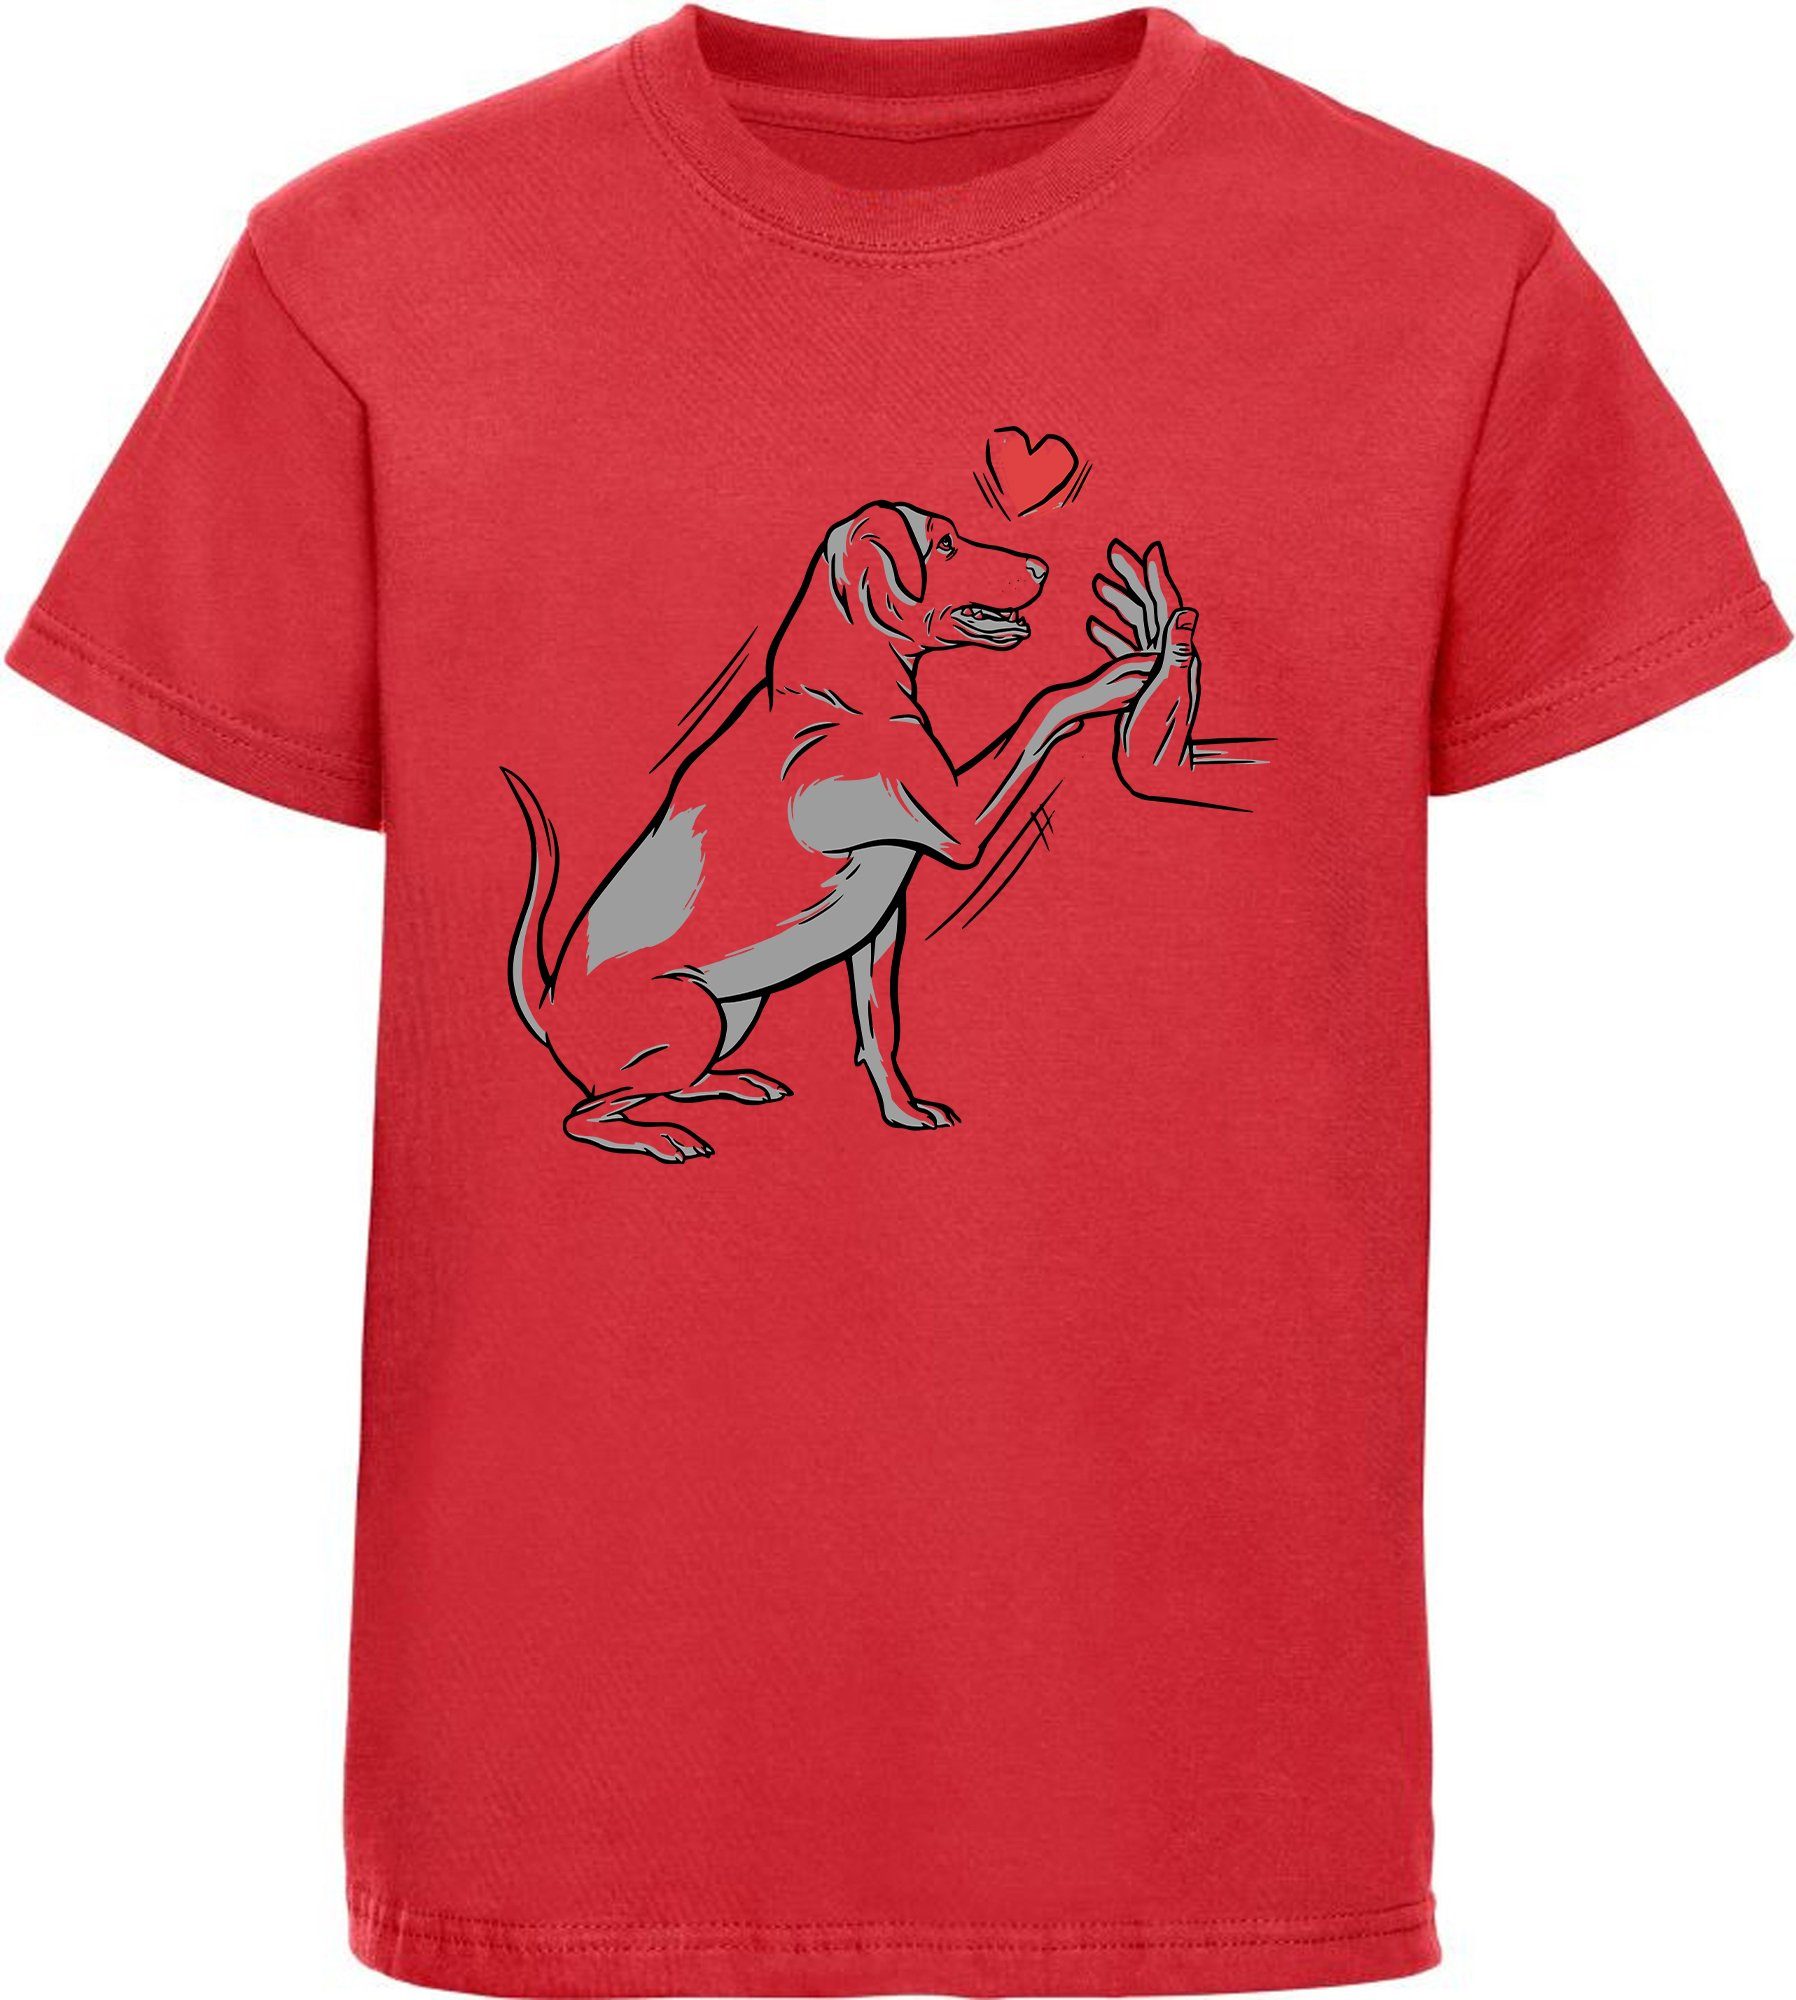 Print-Shirt Aufdruck, Labrador gibt i234 mit MyDesign24 rot Baumwollshirt bedruckt Kinder - Pfötchen Hunde T-Shirt